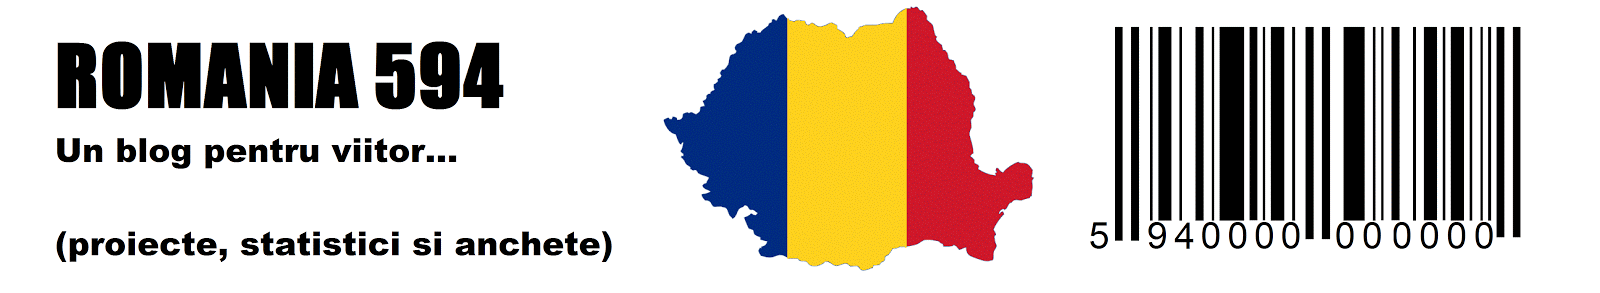 Romania 594